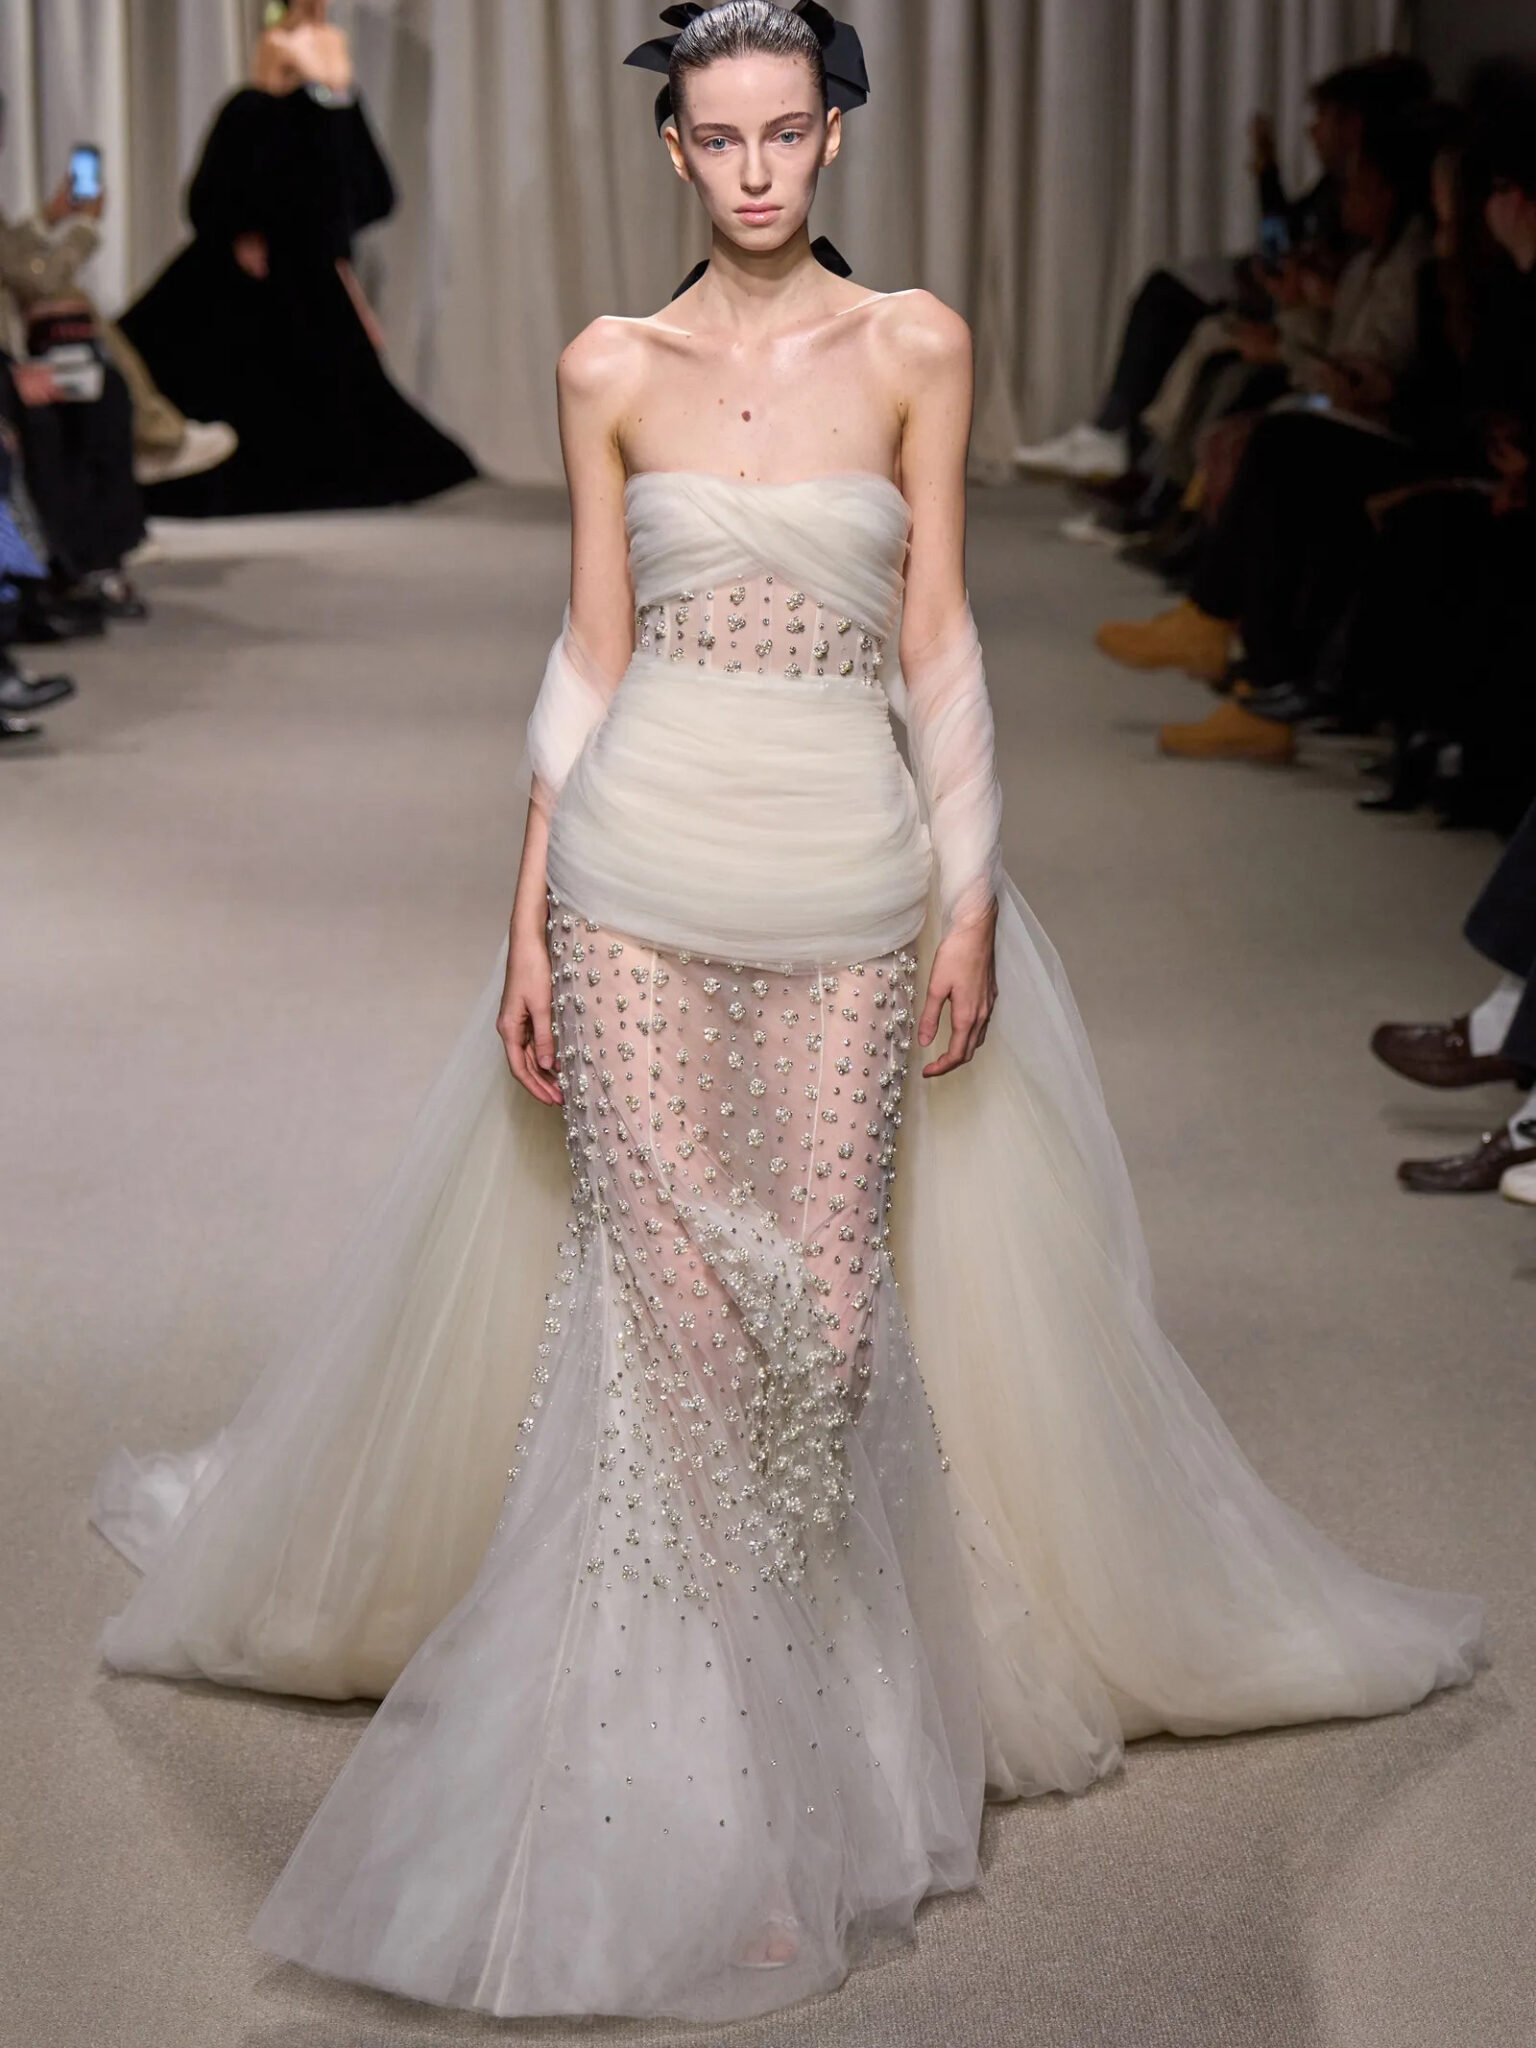 Reimagined Corset Wedding Dresses - The Lane Wedding Inspiration